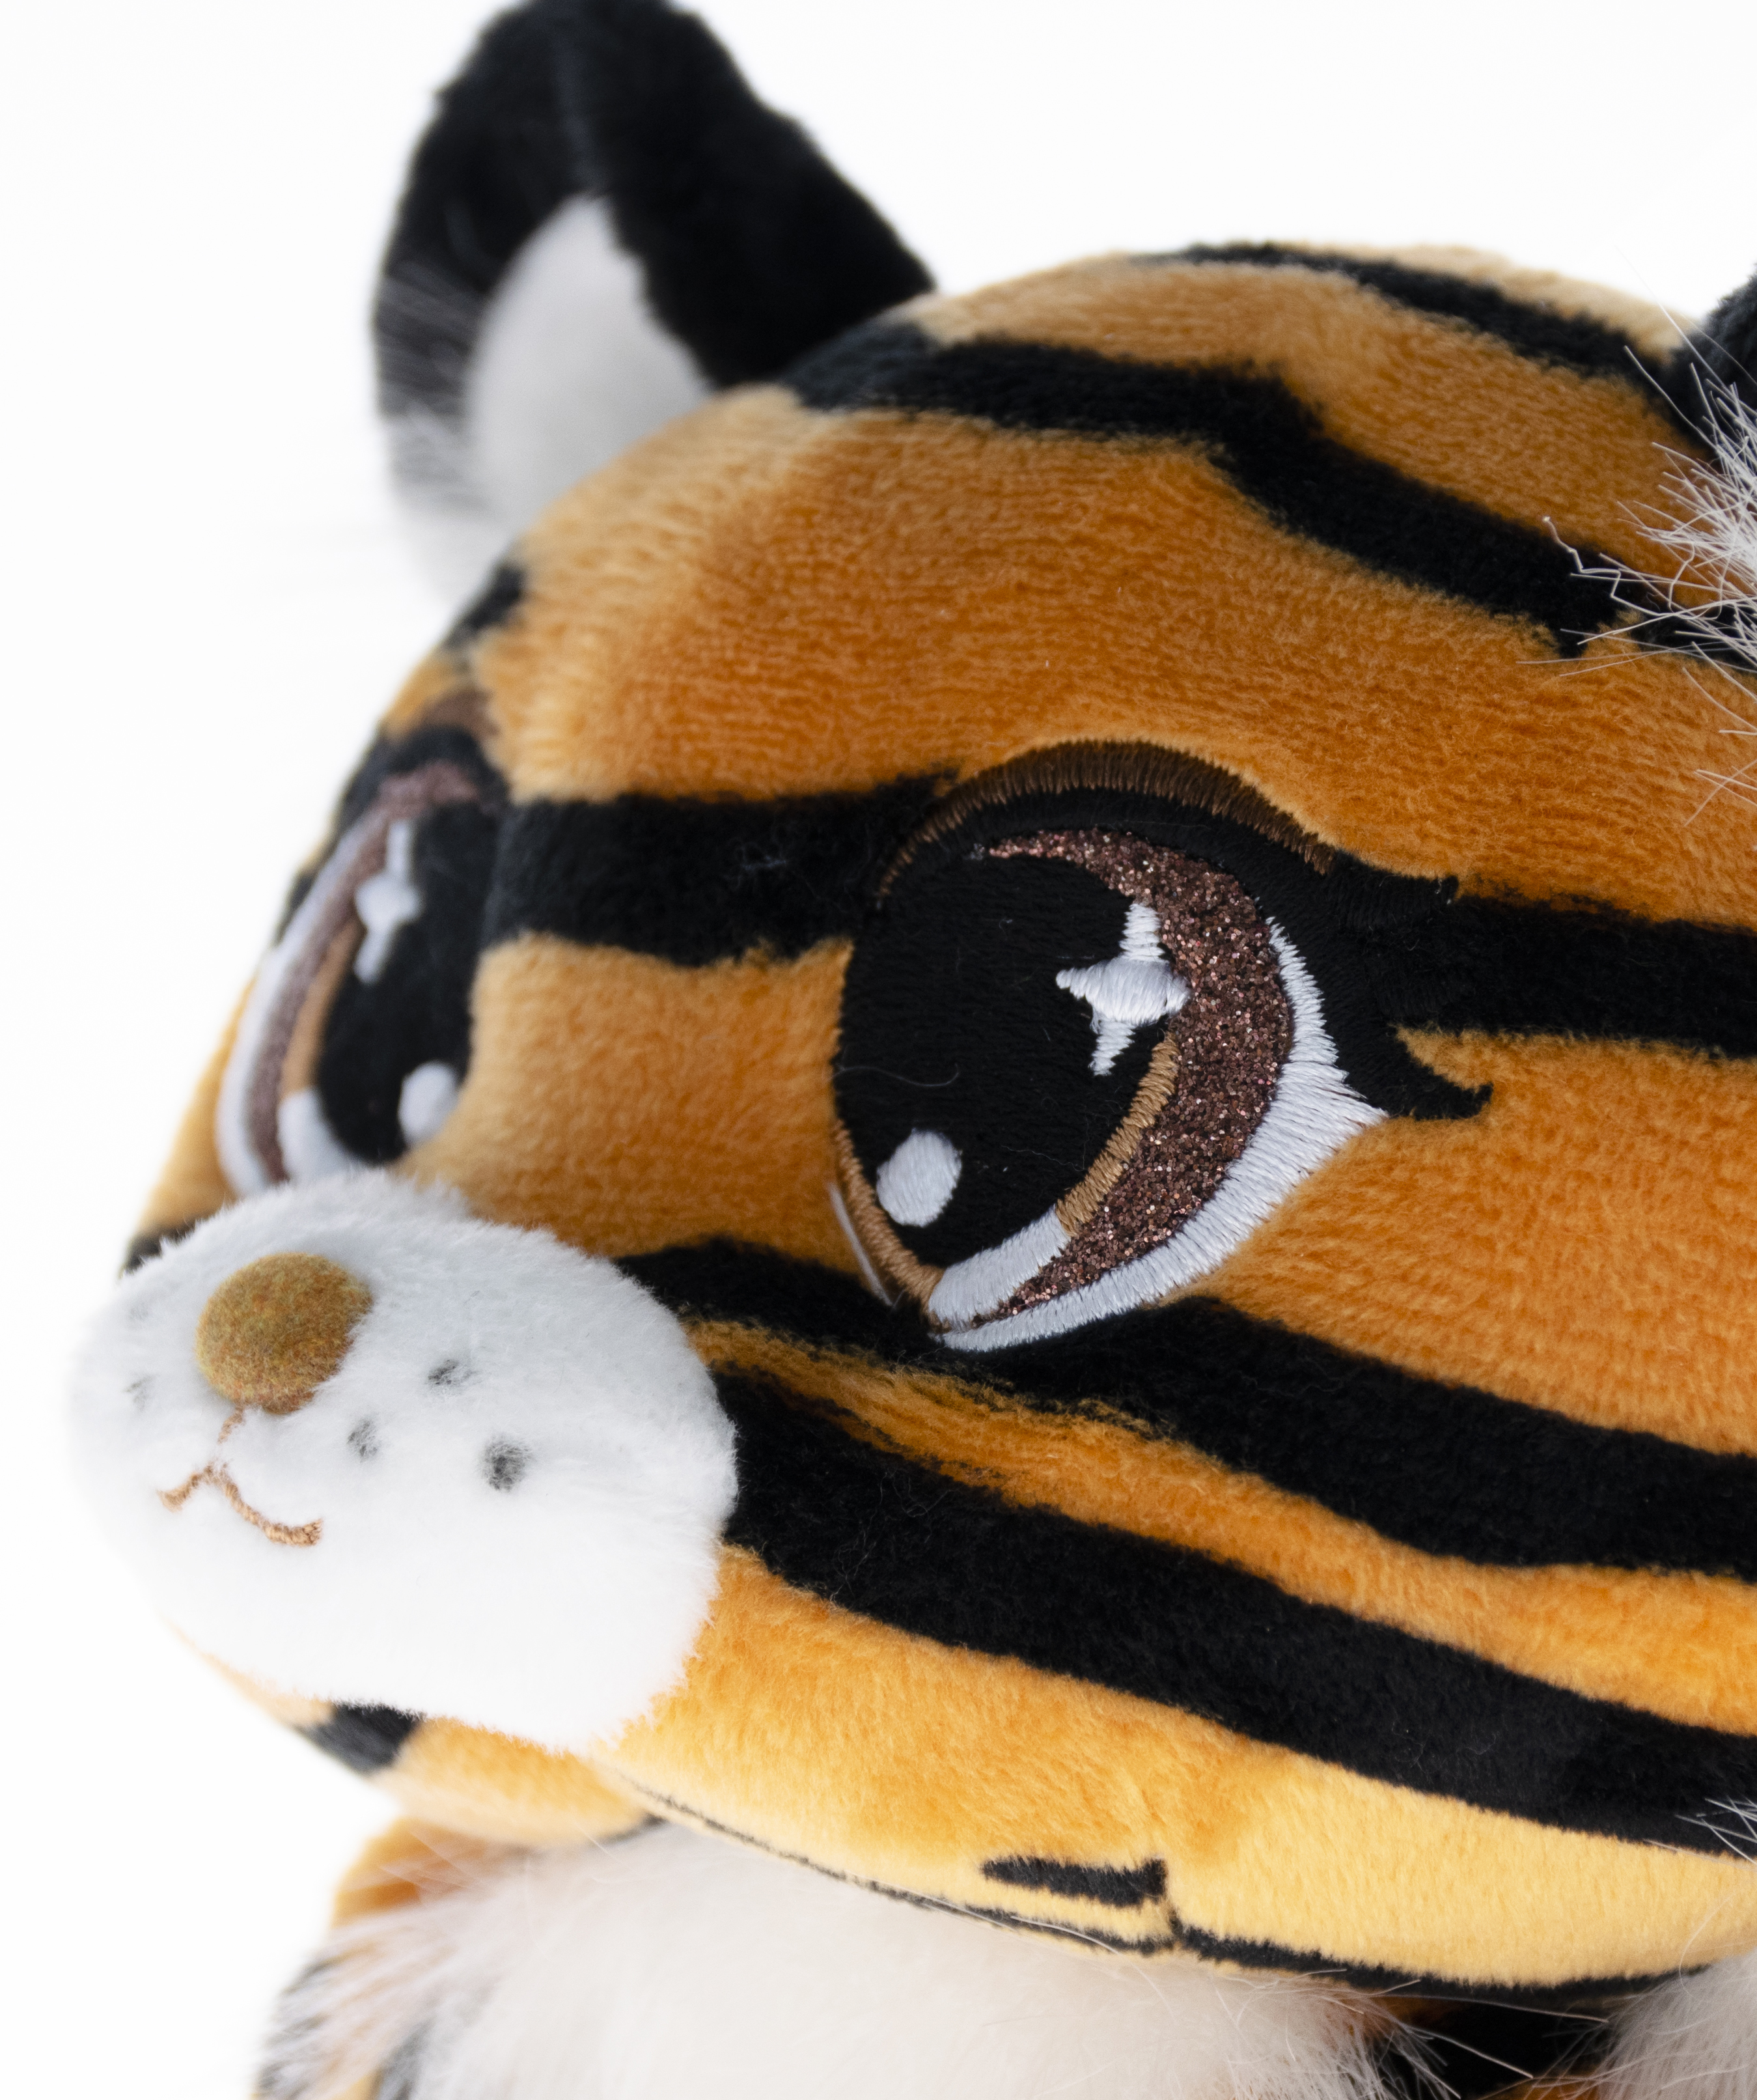 Мягкая игрушка ''Mankan'' Тигр